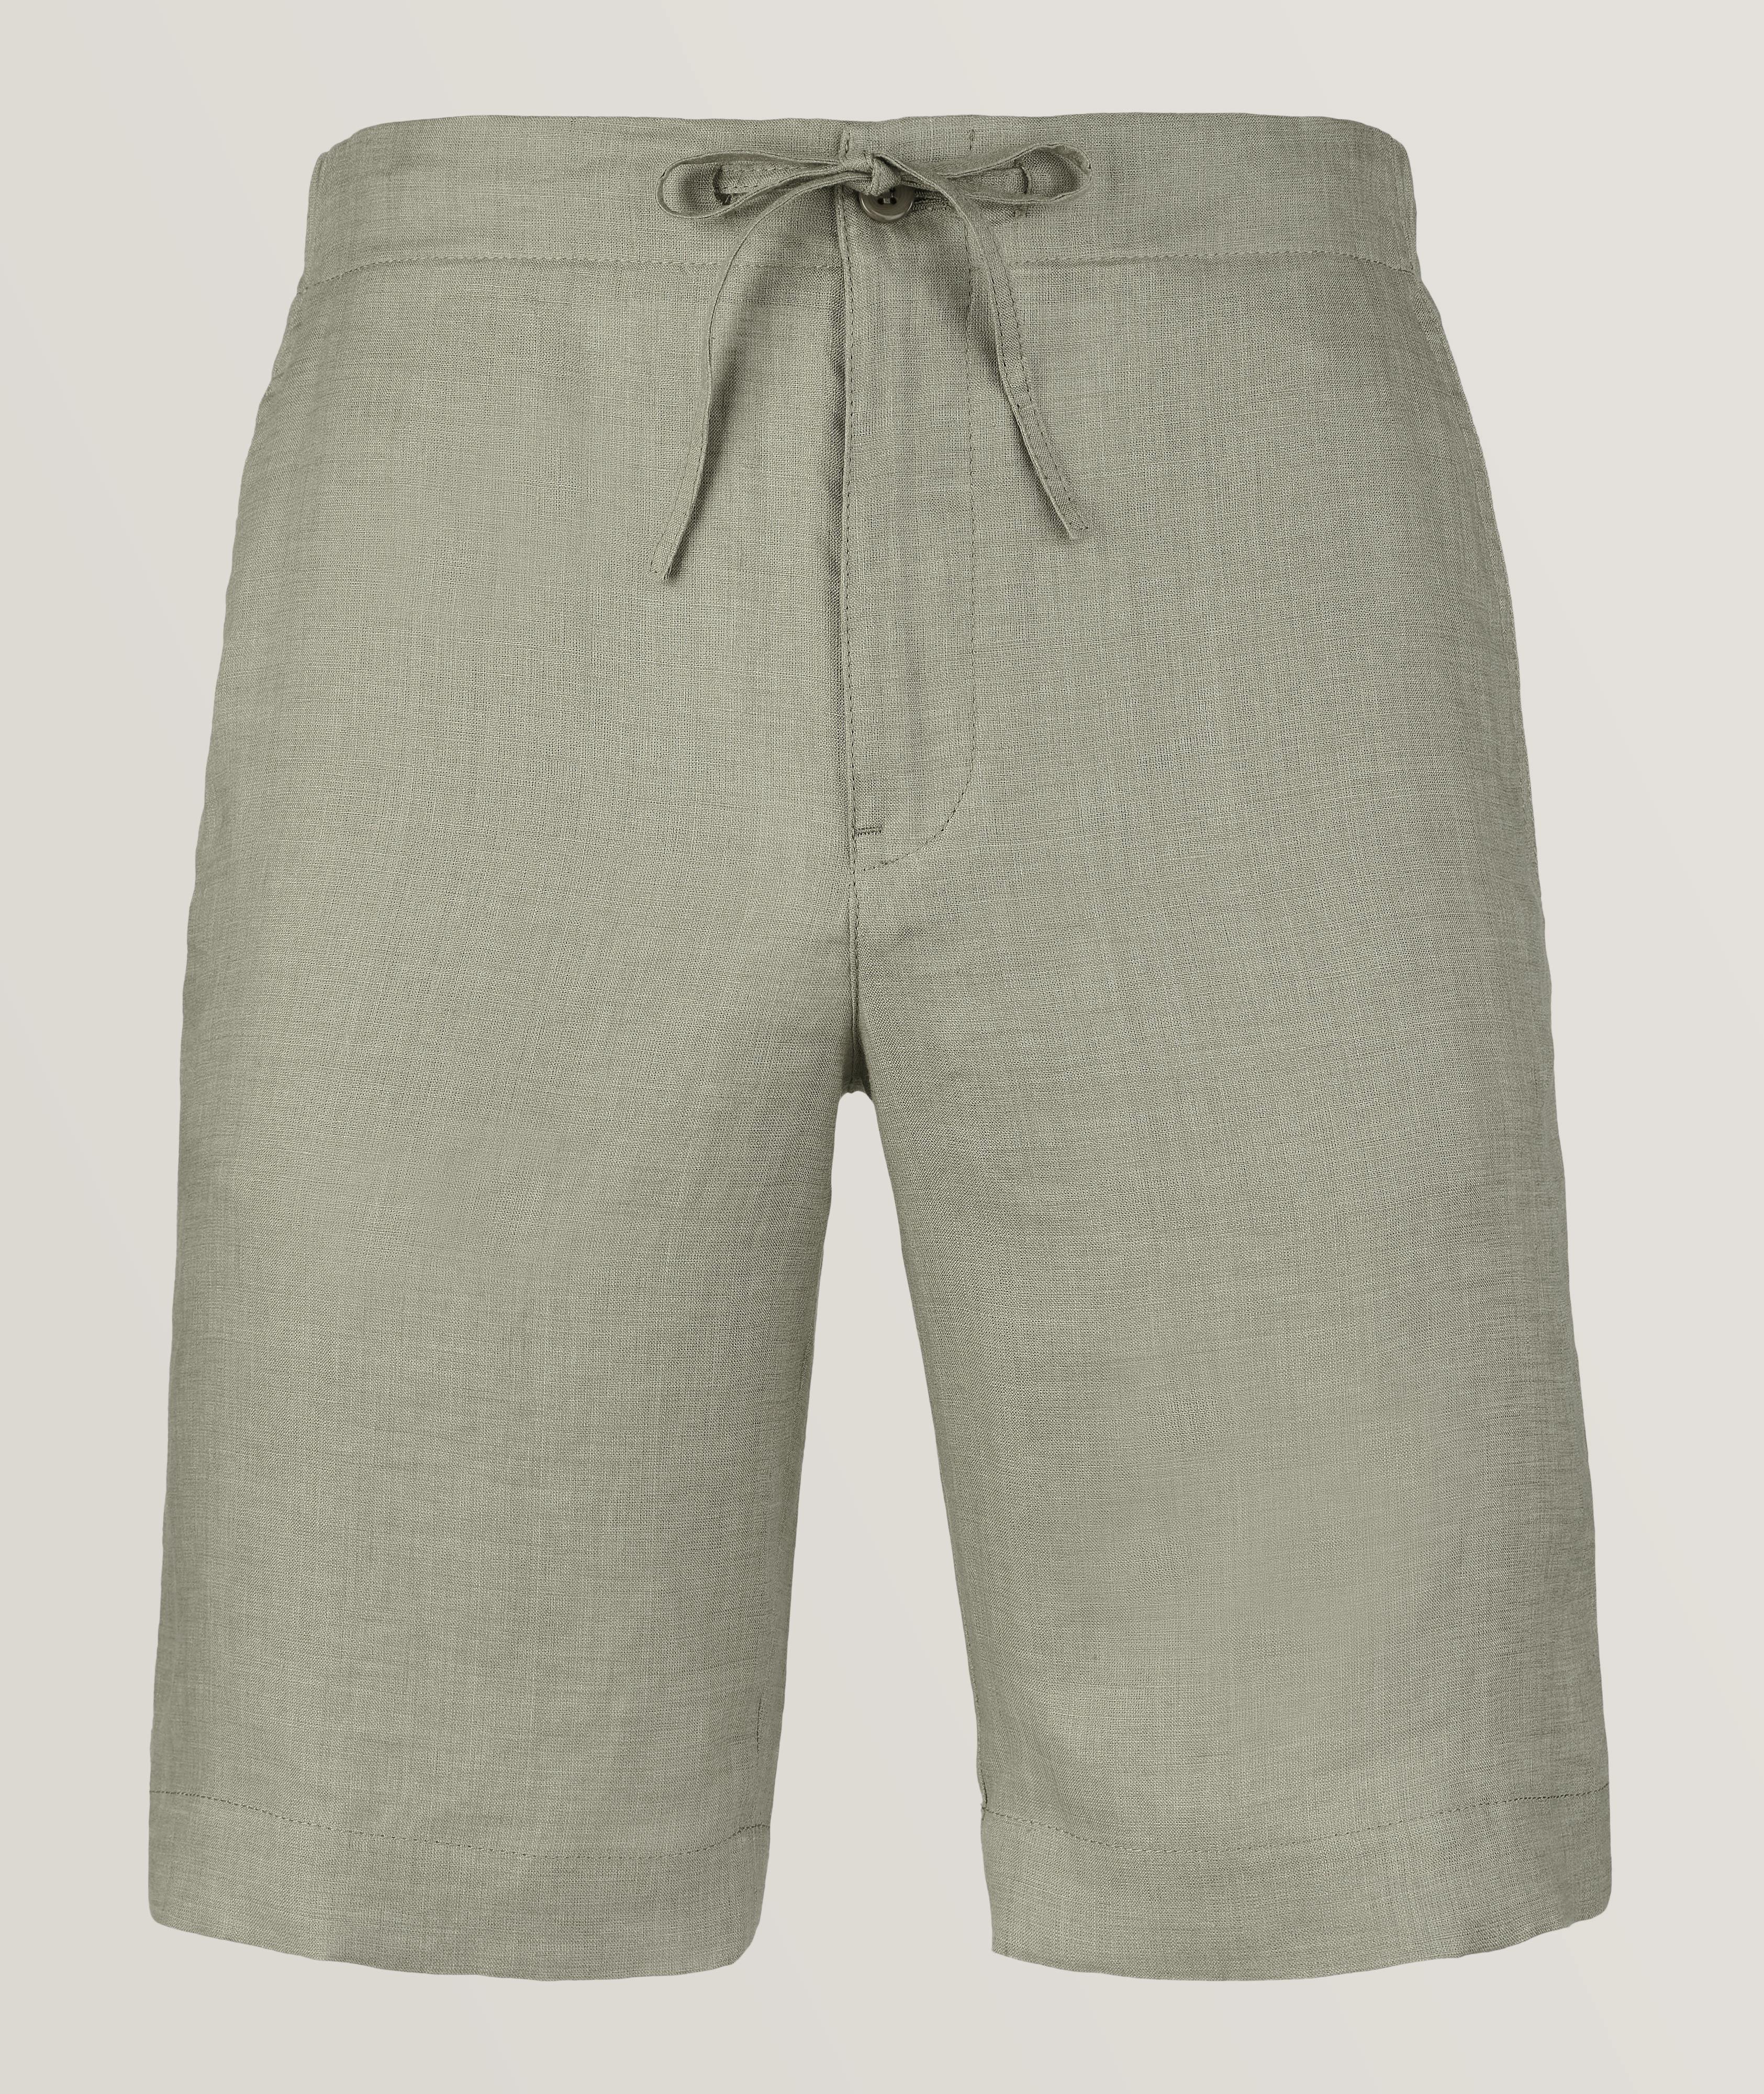 Textured Linen Bermuda Shorts image 0